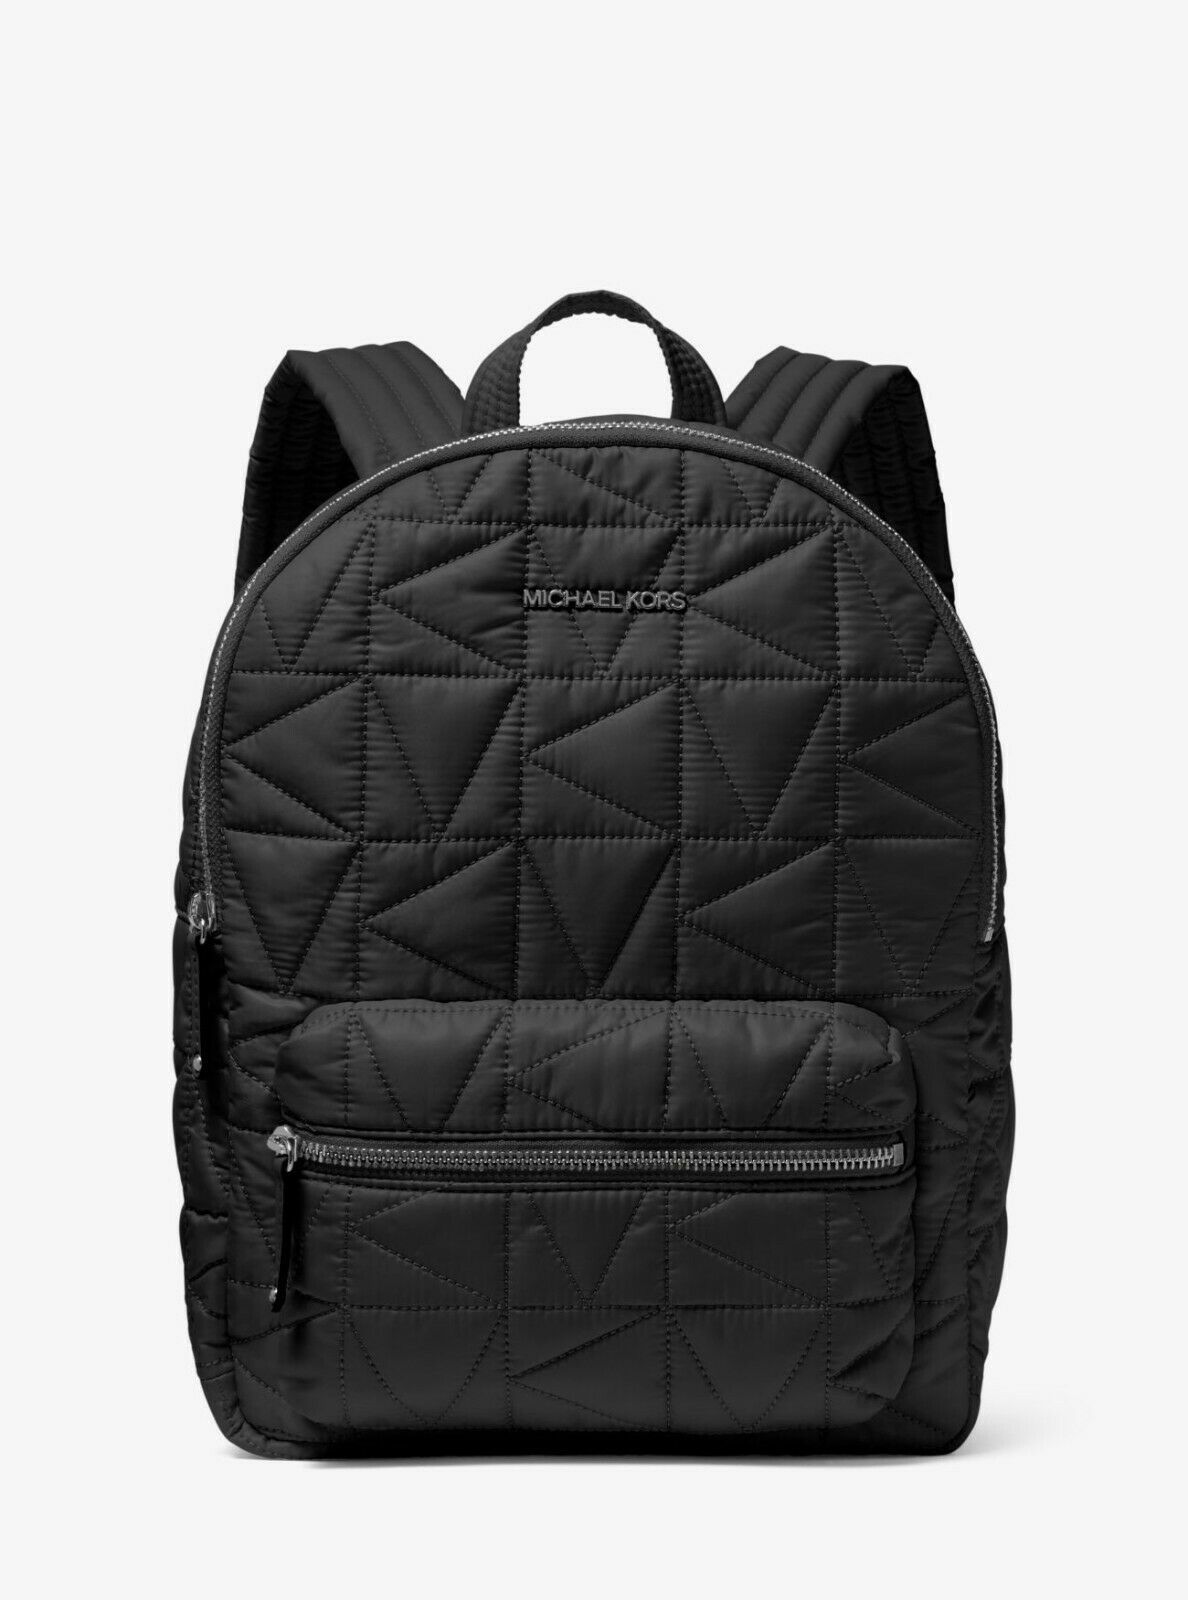 Michael Kors Winnie Medium Quilted Nylon Black Backpack 35T0UW4B2C NWT $398 FS